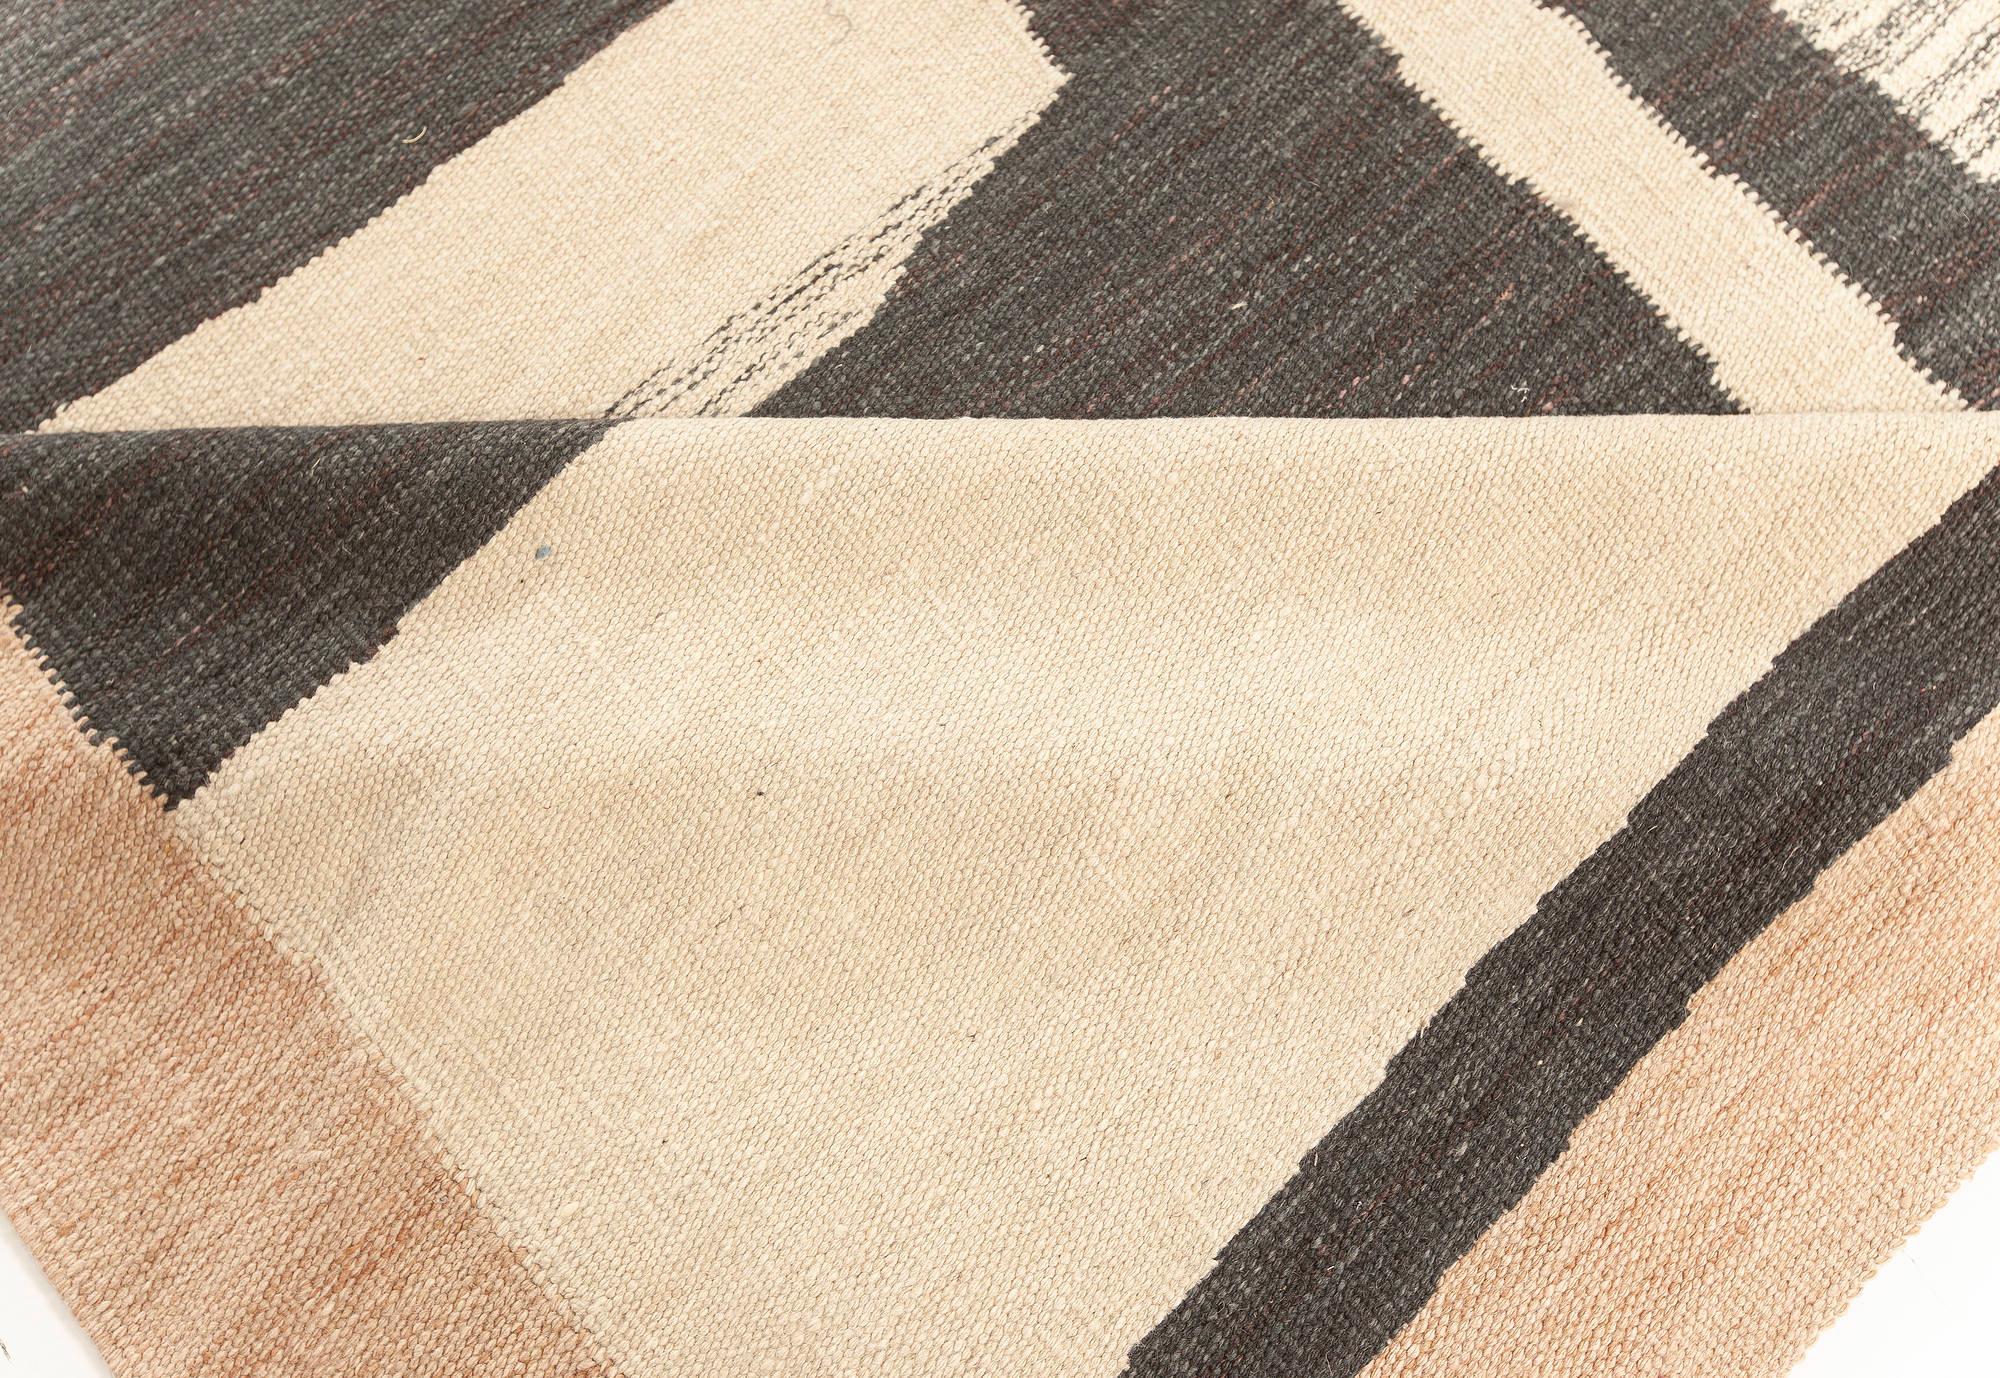 Modern Geometric Flat Weave Rug by Doris Leslie Blau
Size: 14'1